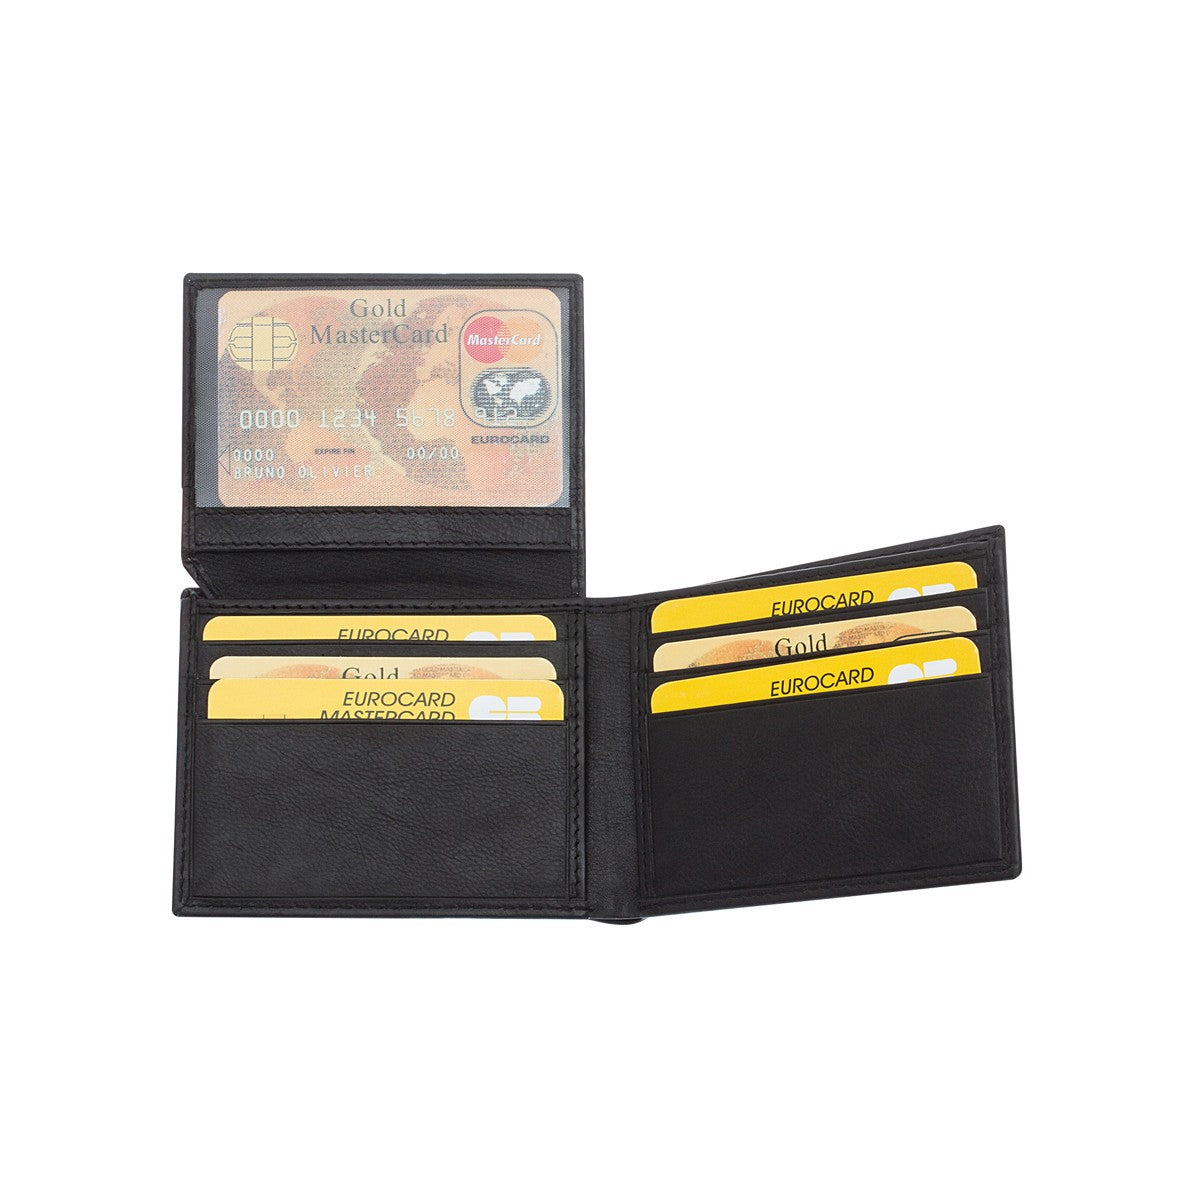 Sauvage men's wallet in calfskin, banknote card holder, side pockets